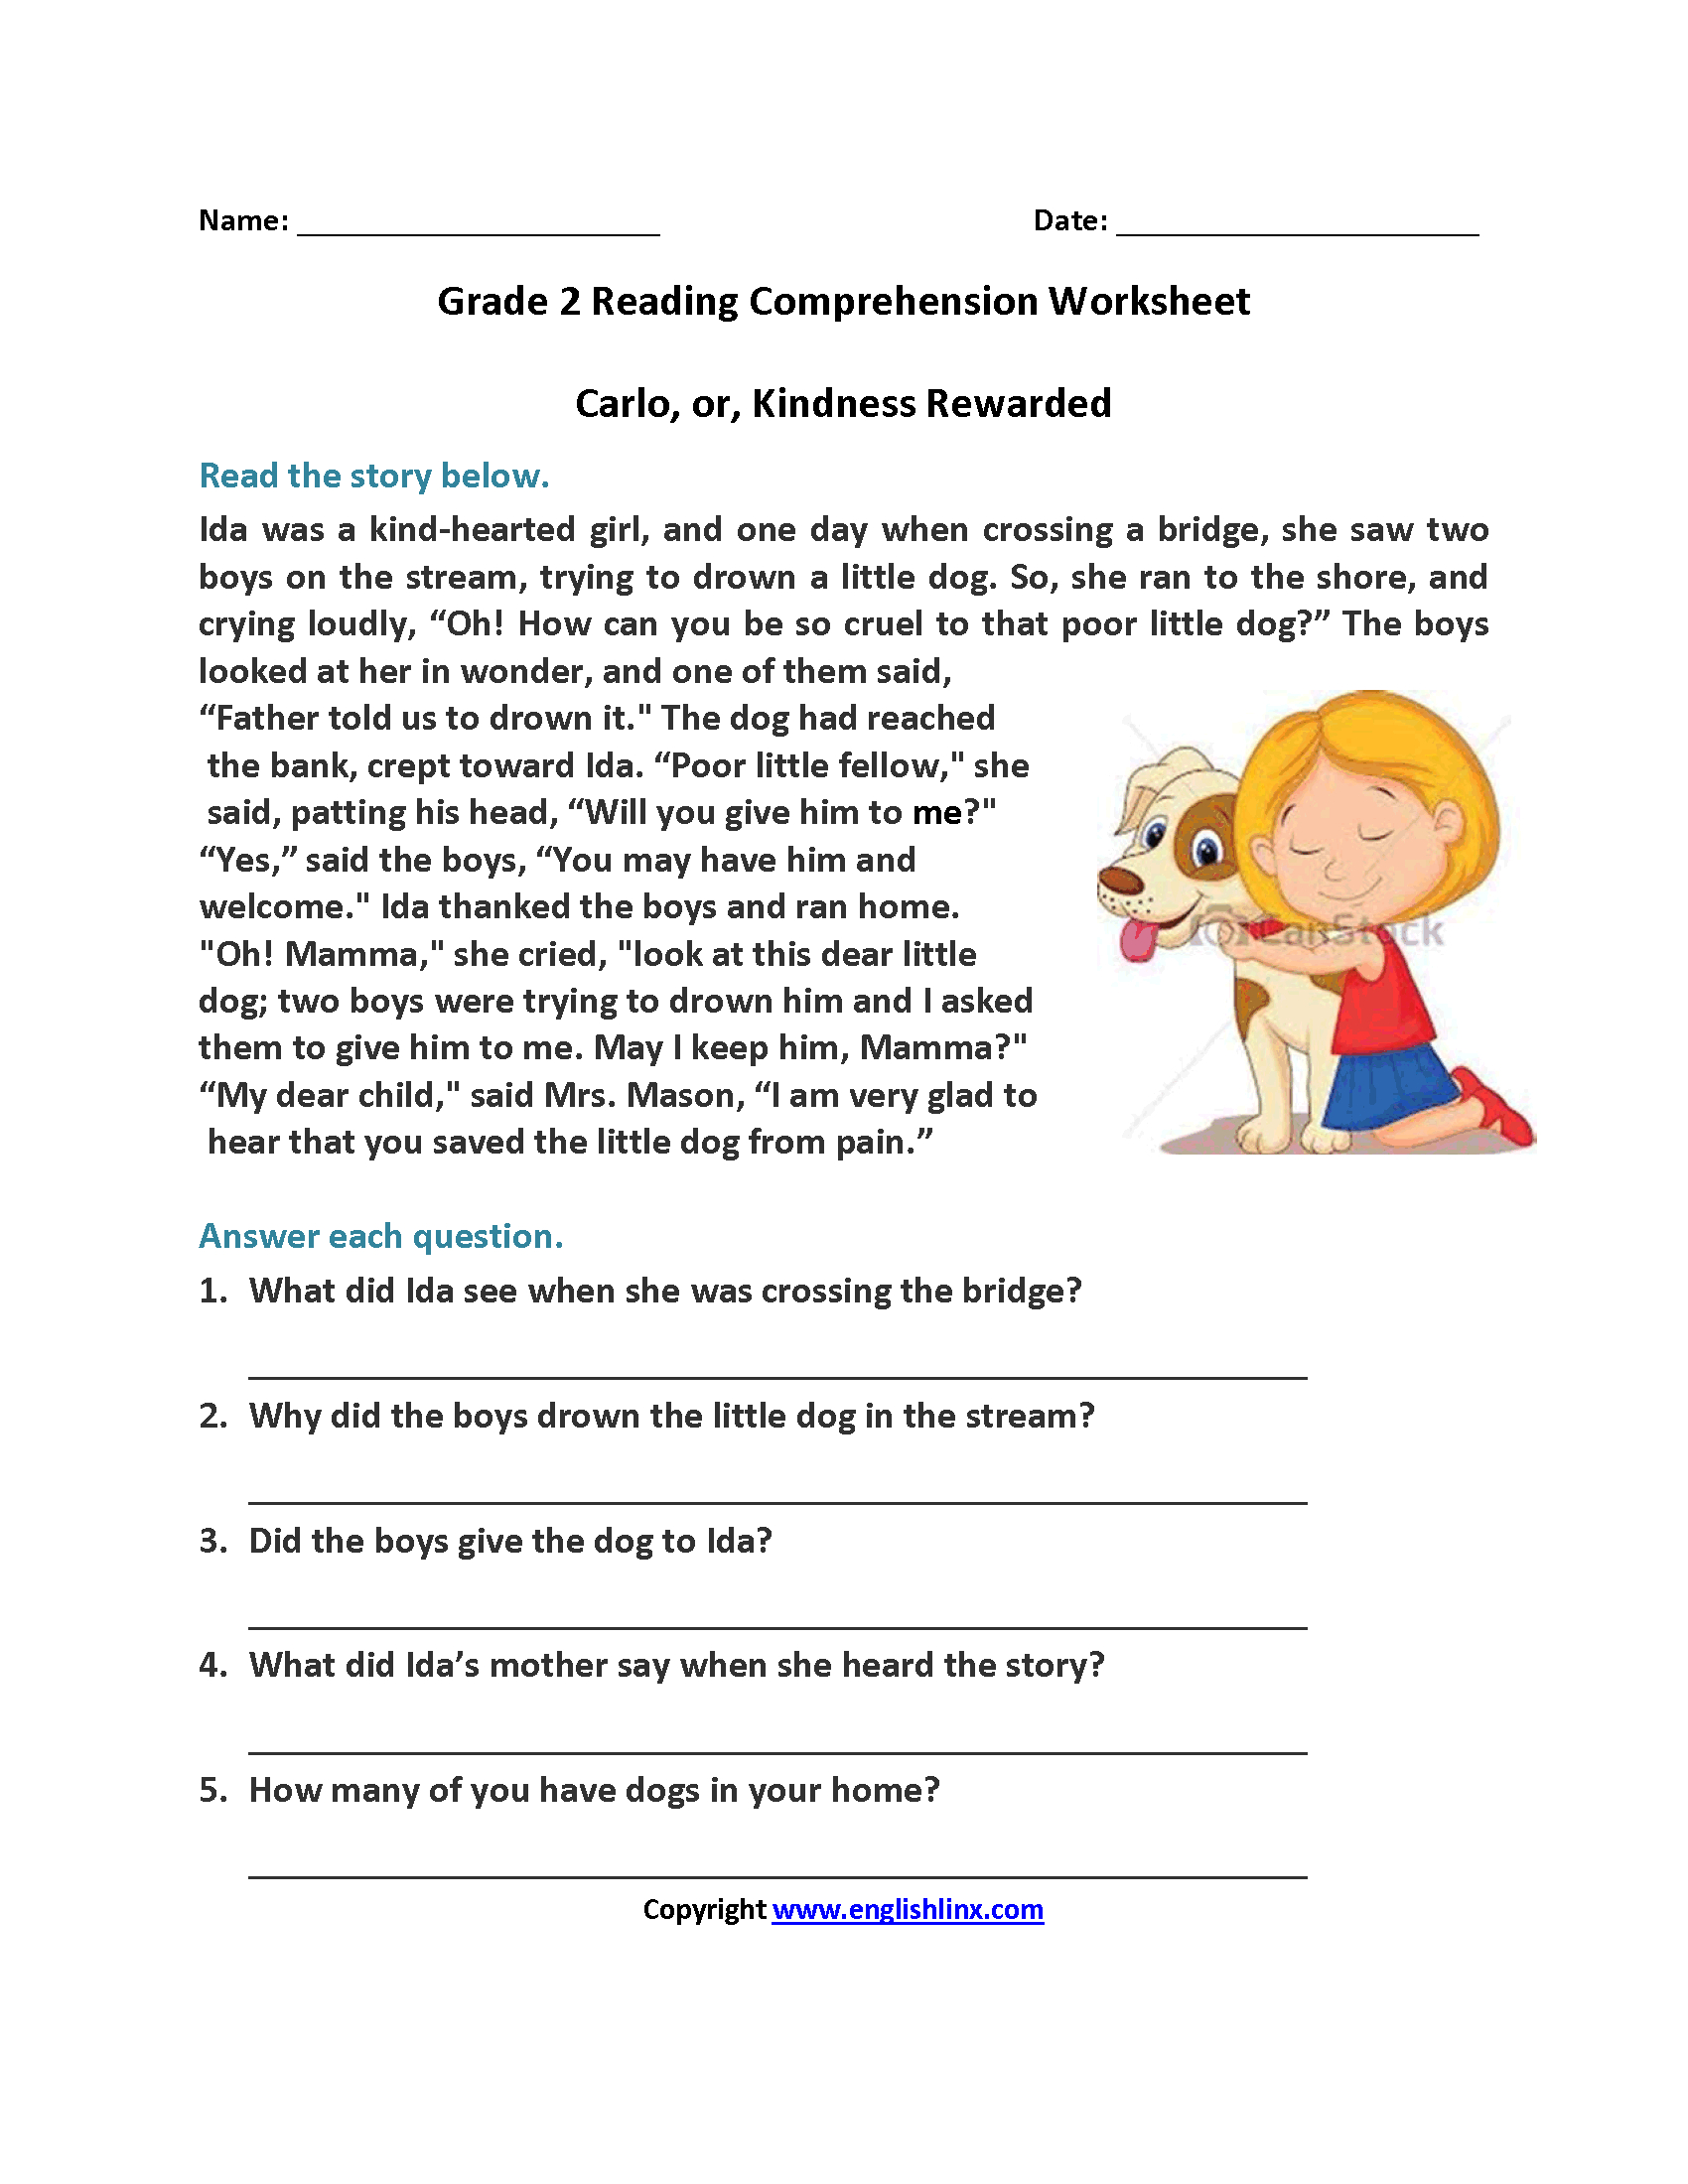 Carlo Or Kindness Rewarded Second Grade Reading Worksheets | Reading | Printable Comprehension Worksheets For Grade 3